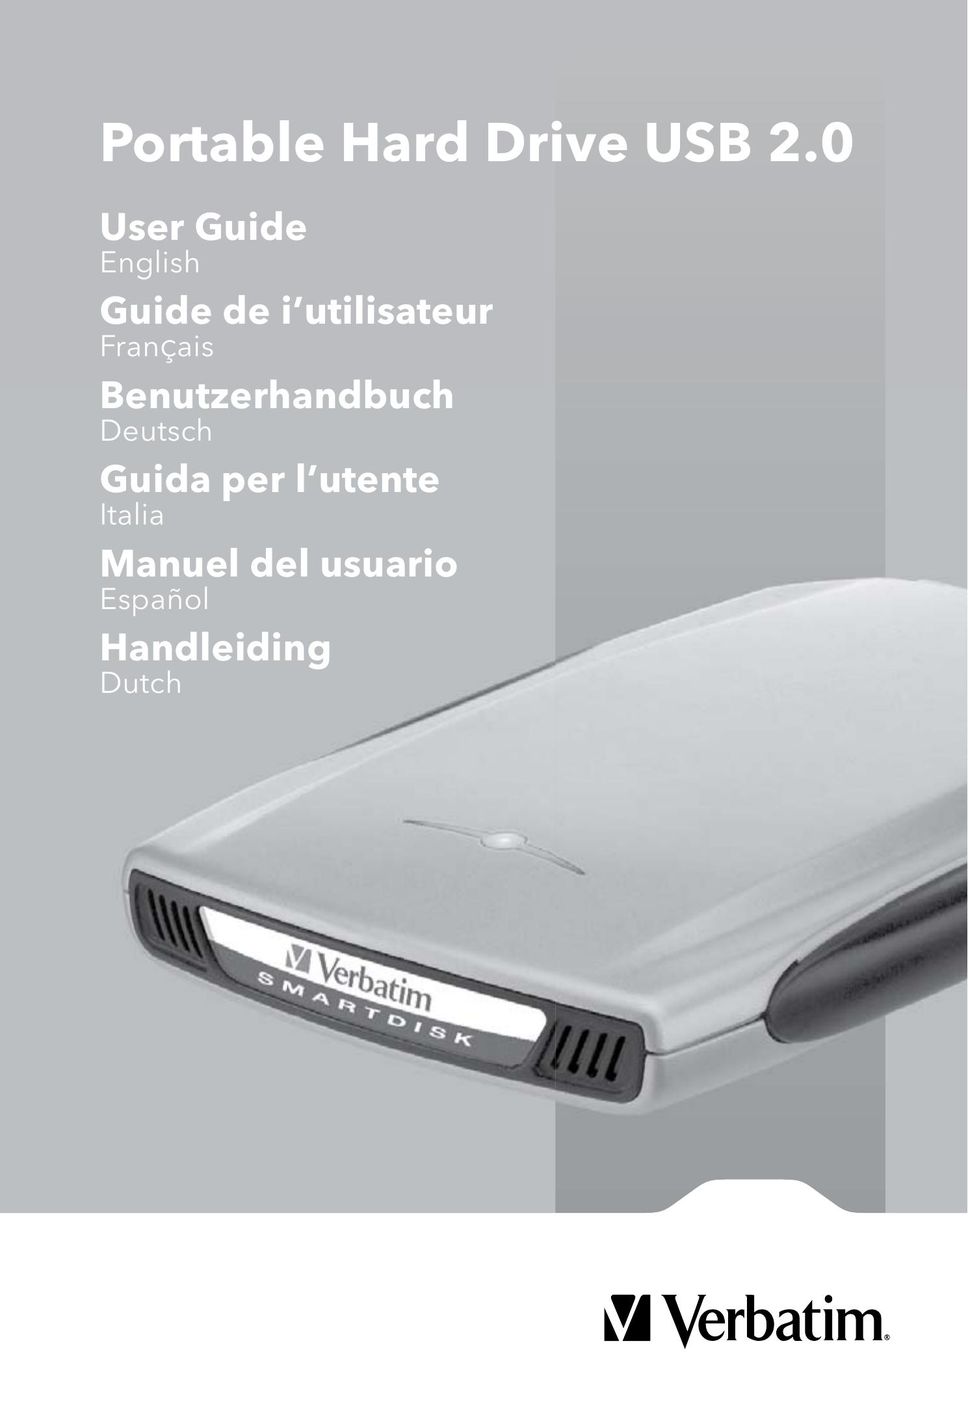 Verbatim Portable Hard Drive USB 2.0 Computer Drive User Manual